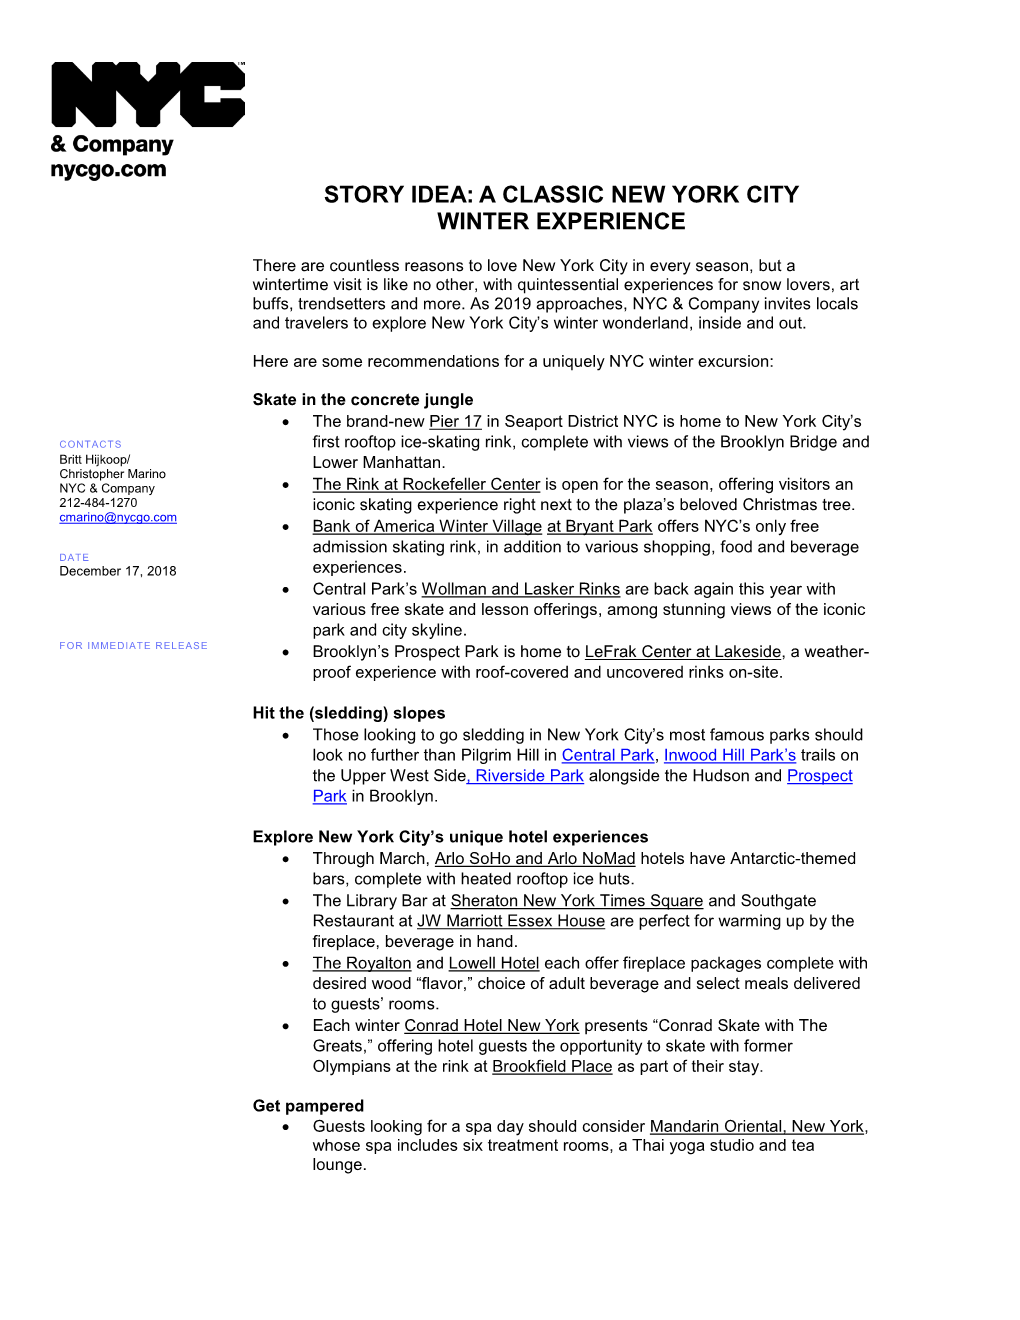 Story Idea: a Classic New York City Winter Experience